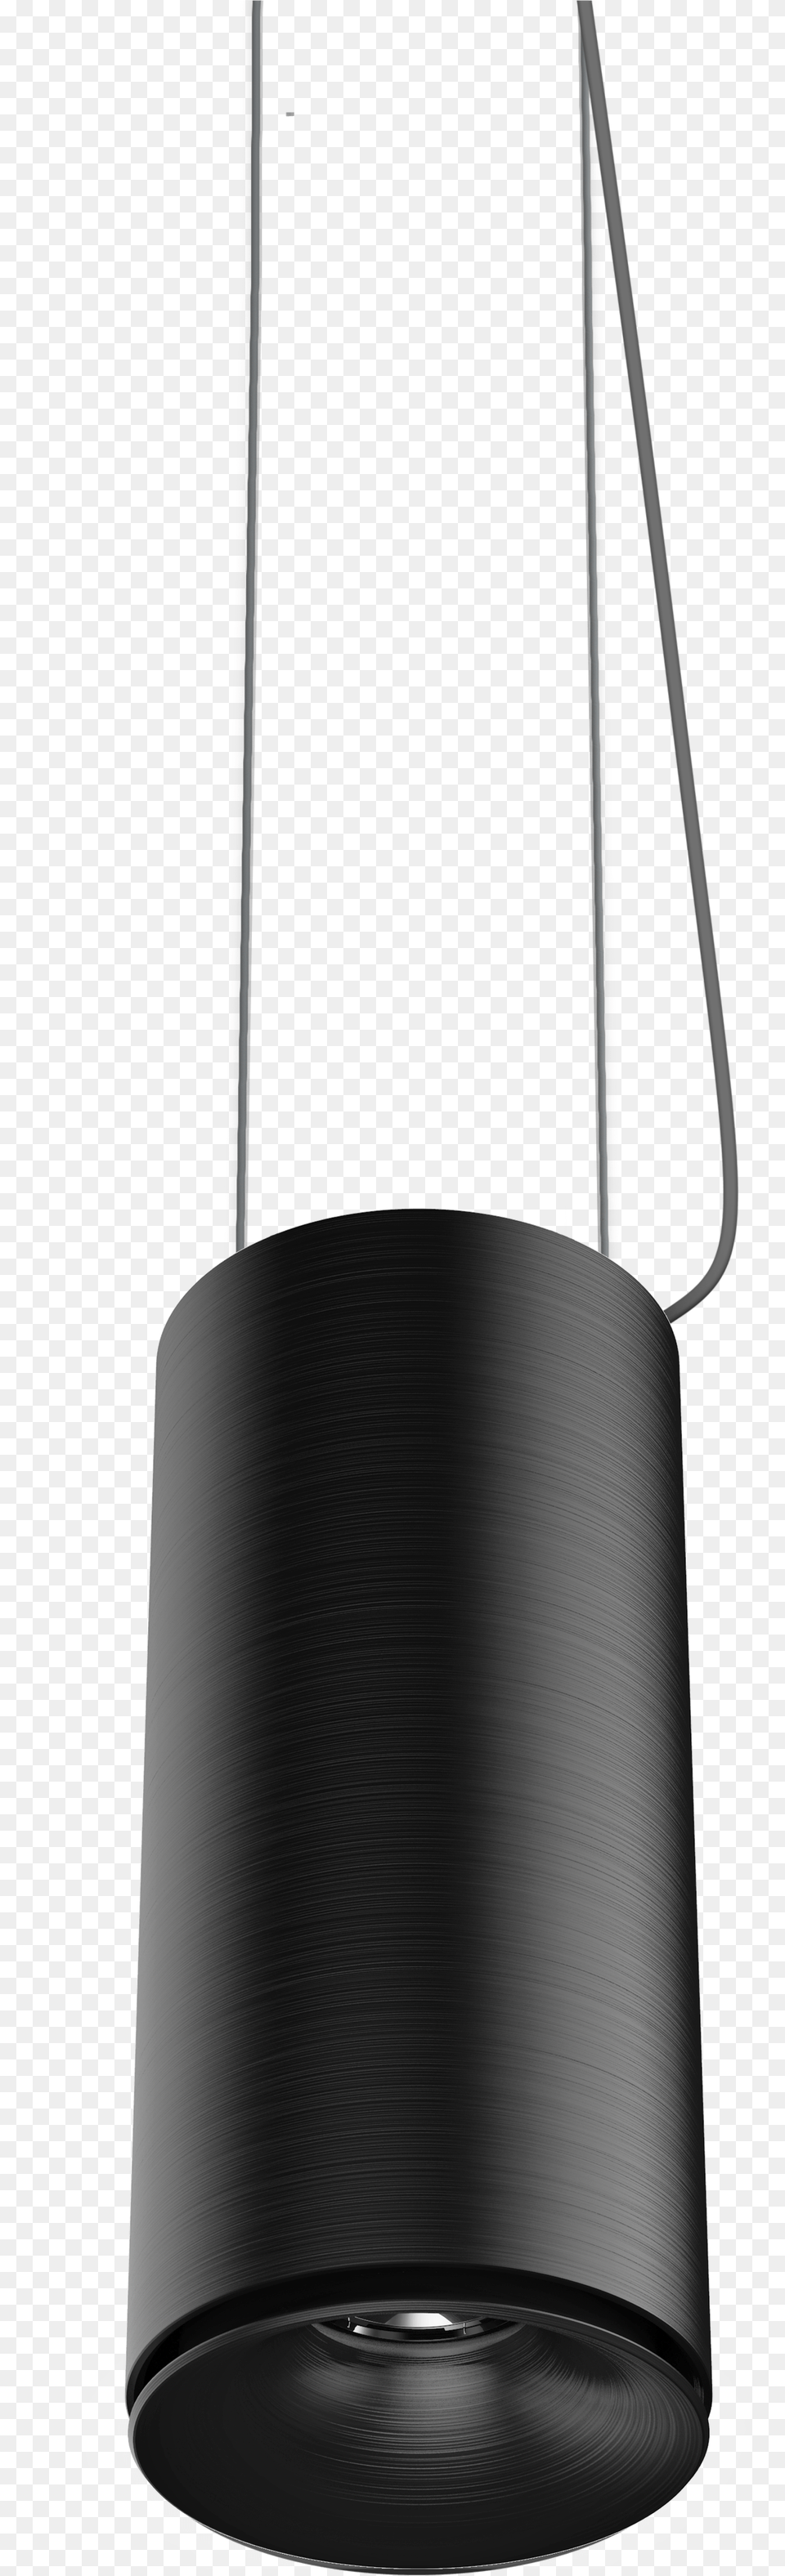 Silo Rope, Lamp, Lighting Free Transparent Png